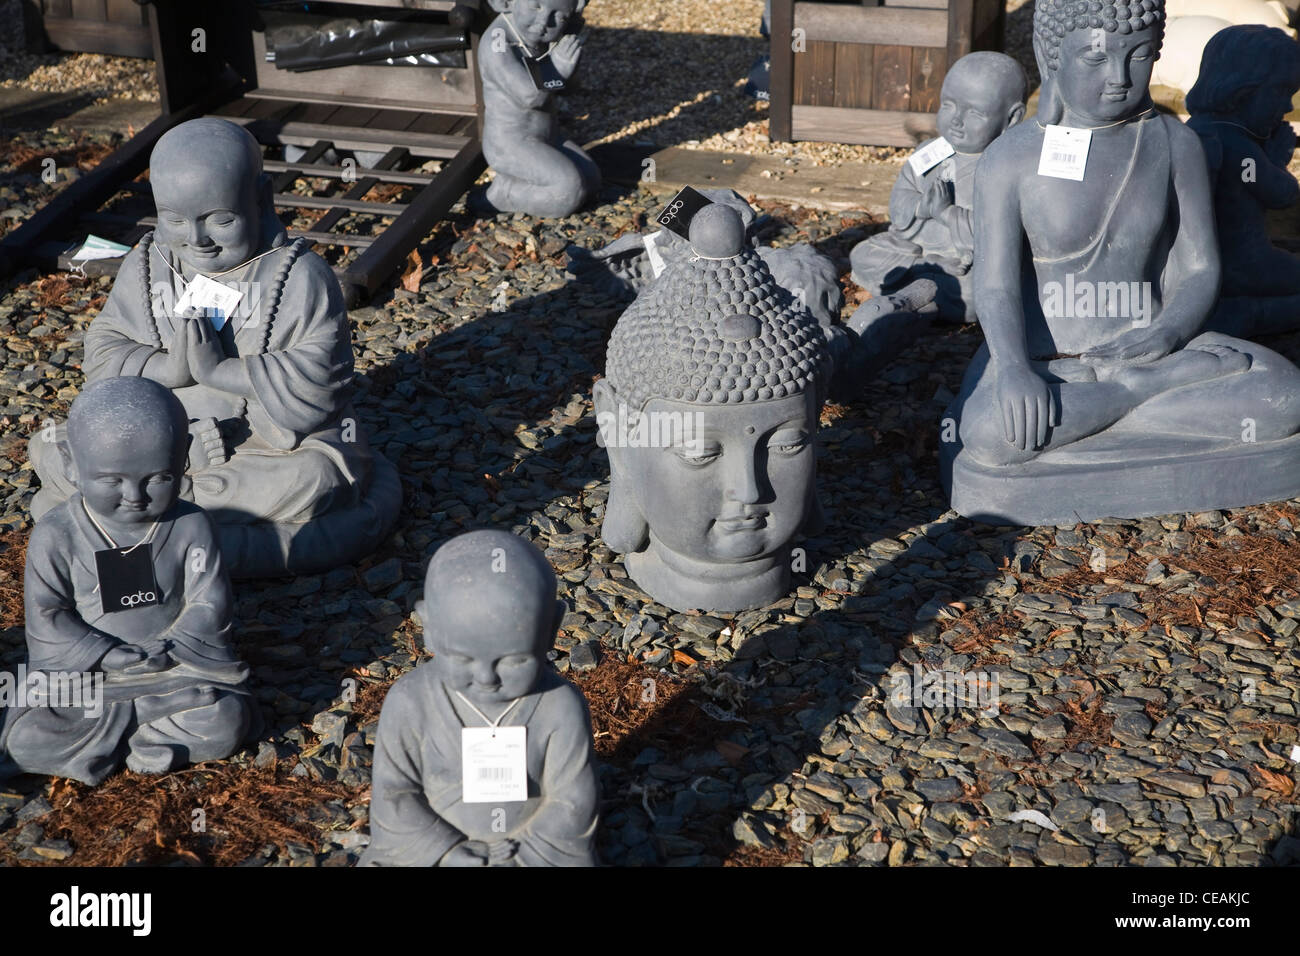 and Alamy gardening - Buddha hi-res stock images photography